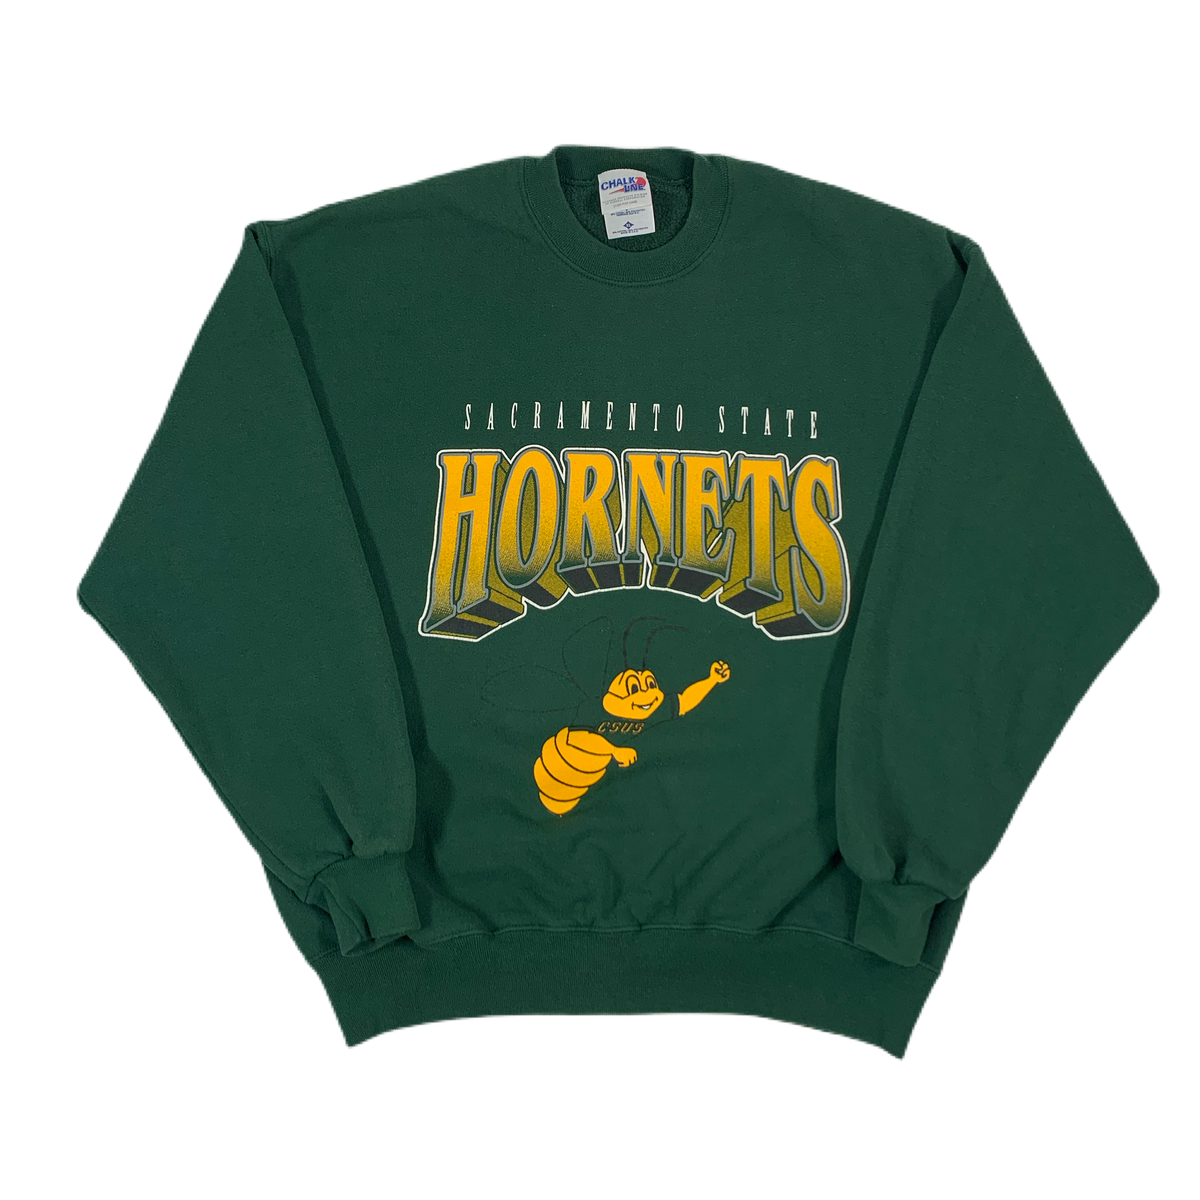 Vintage Sacramento State “Hornets” Crewneck Sweatshirt - jointcustodydc